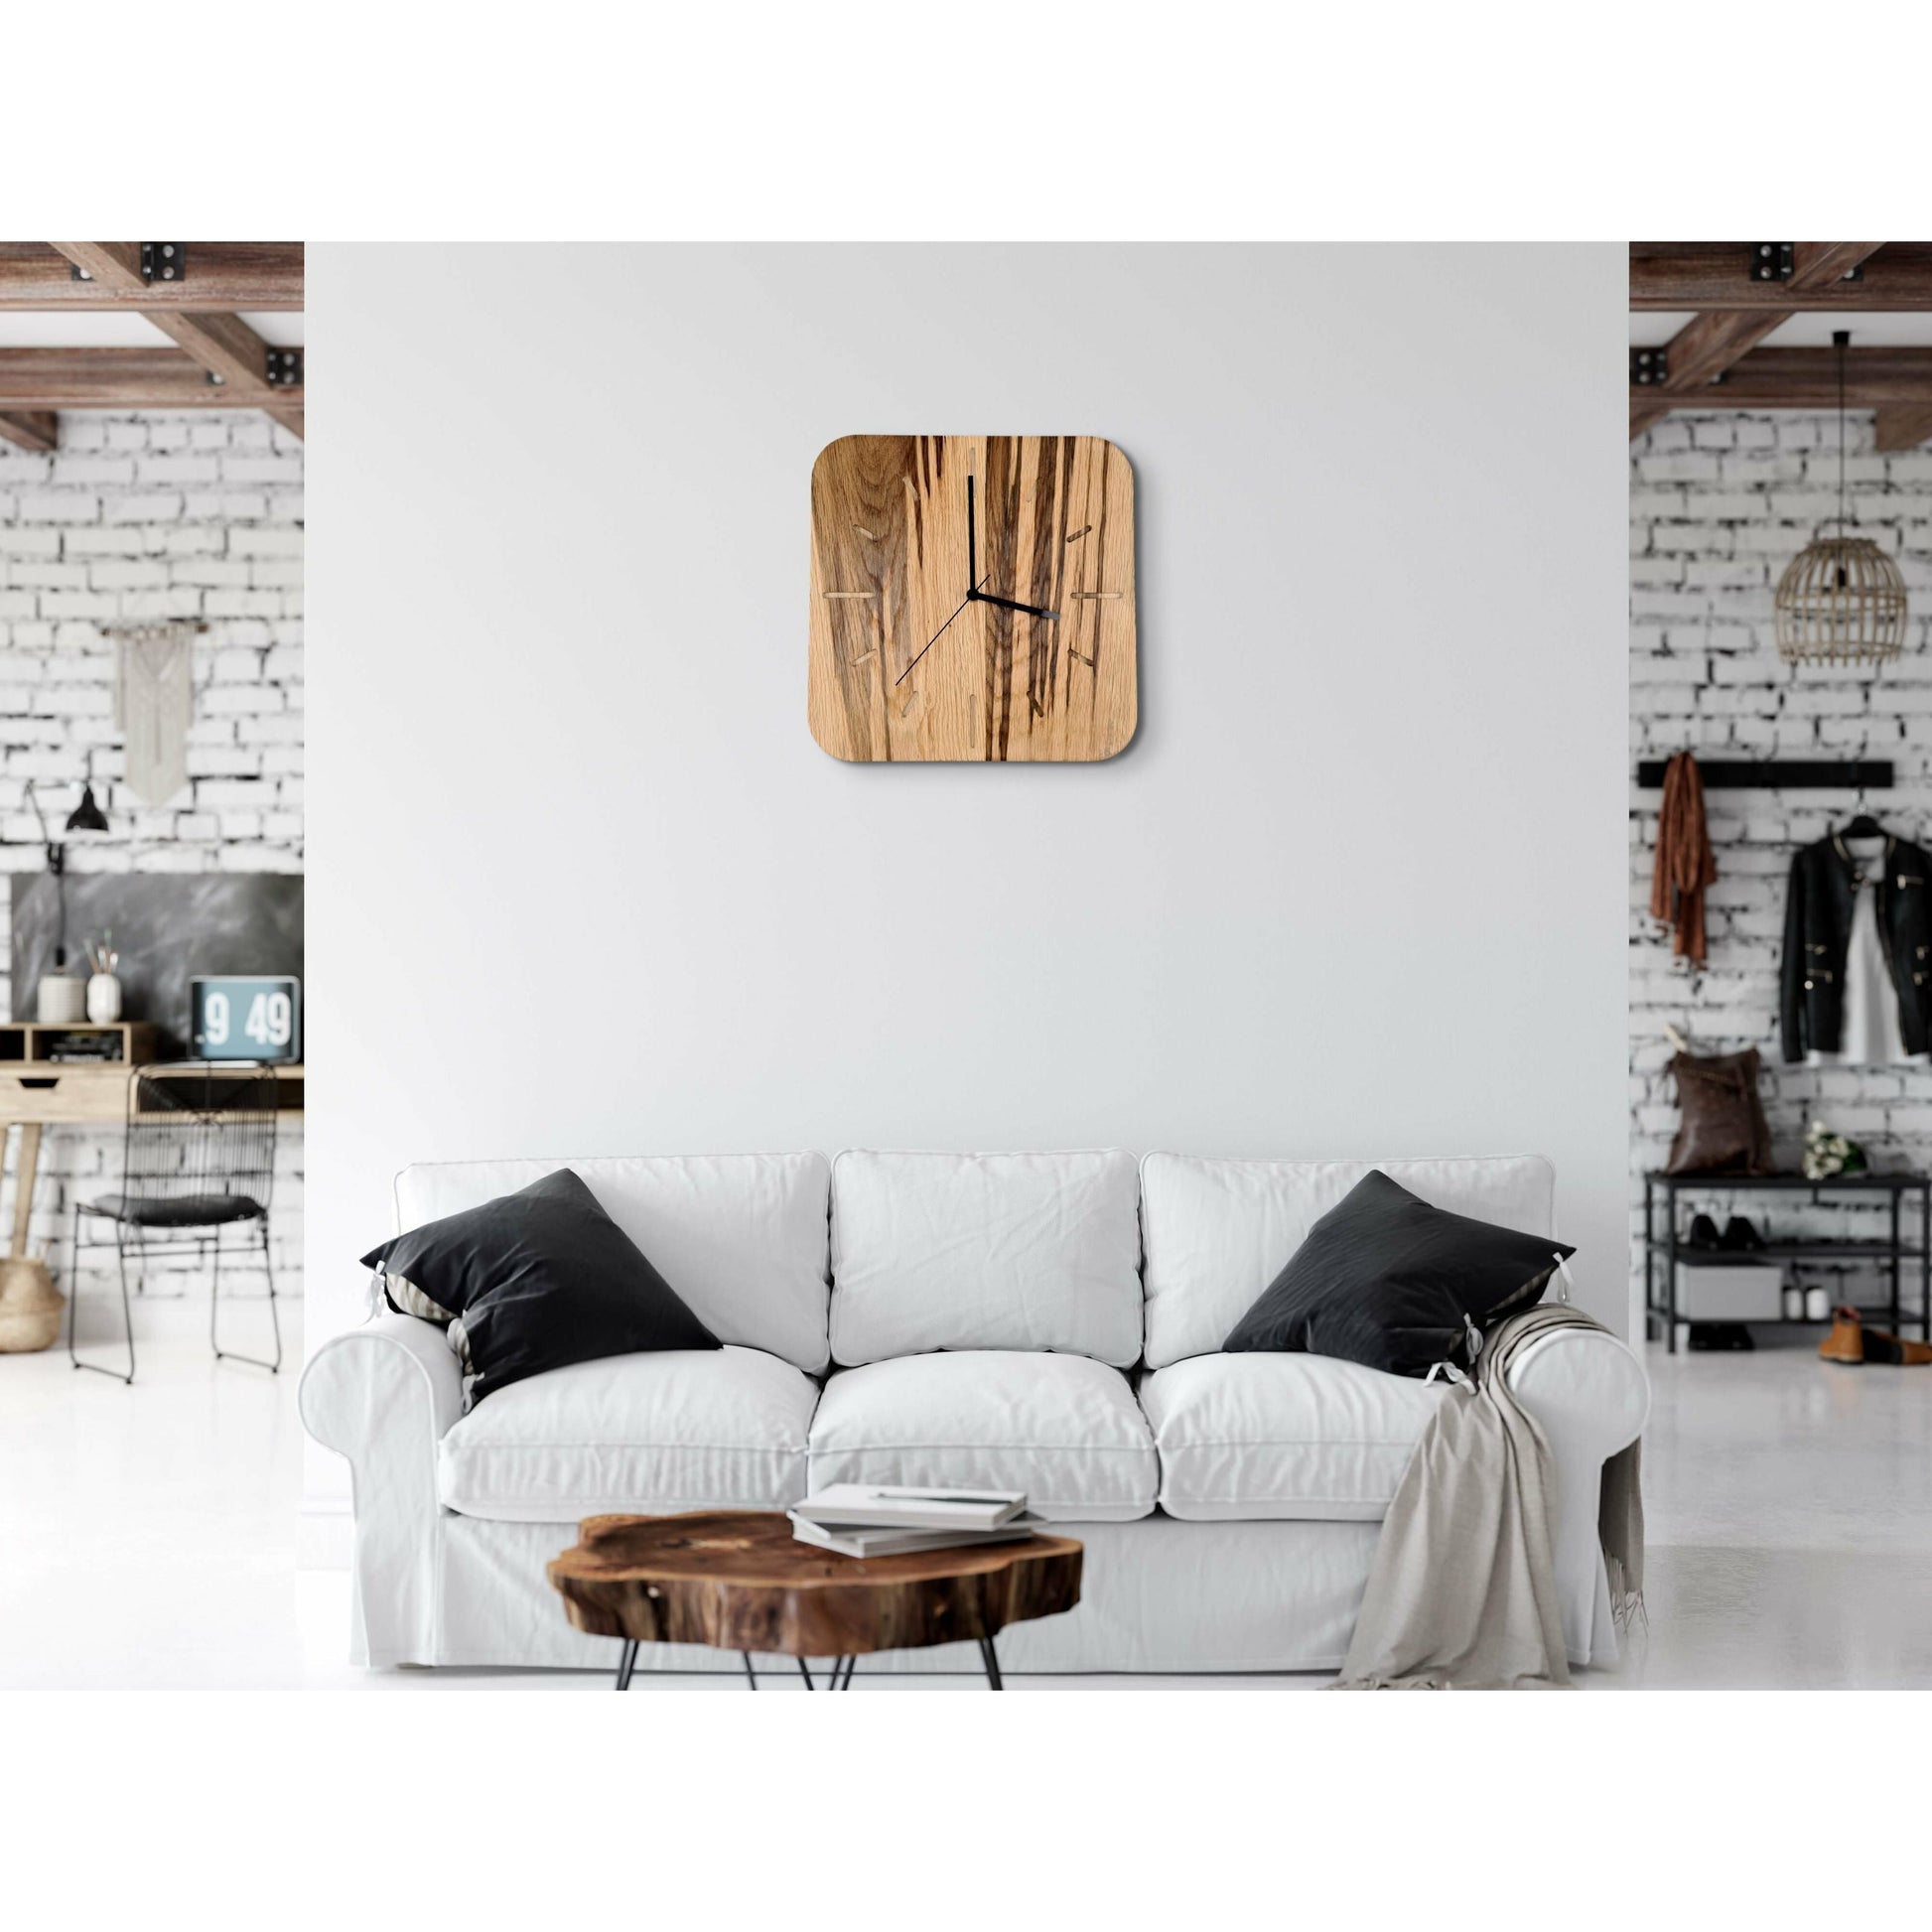 ClockDesignCo 100% Solid Oak Wooden Wall Clock | Large Square Kitchen Clock | Rustic Wall Clock